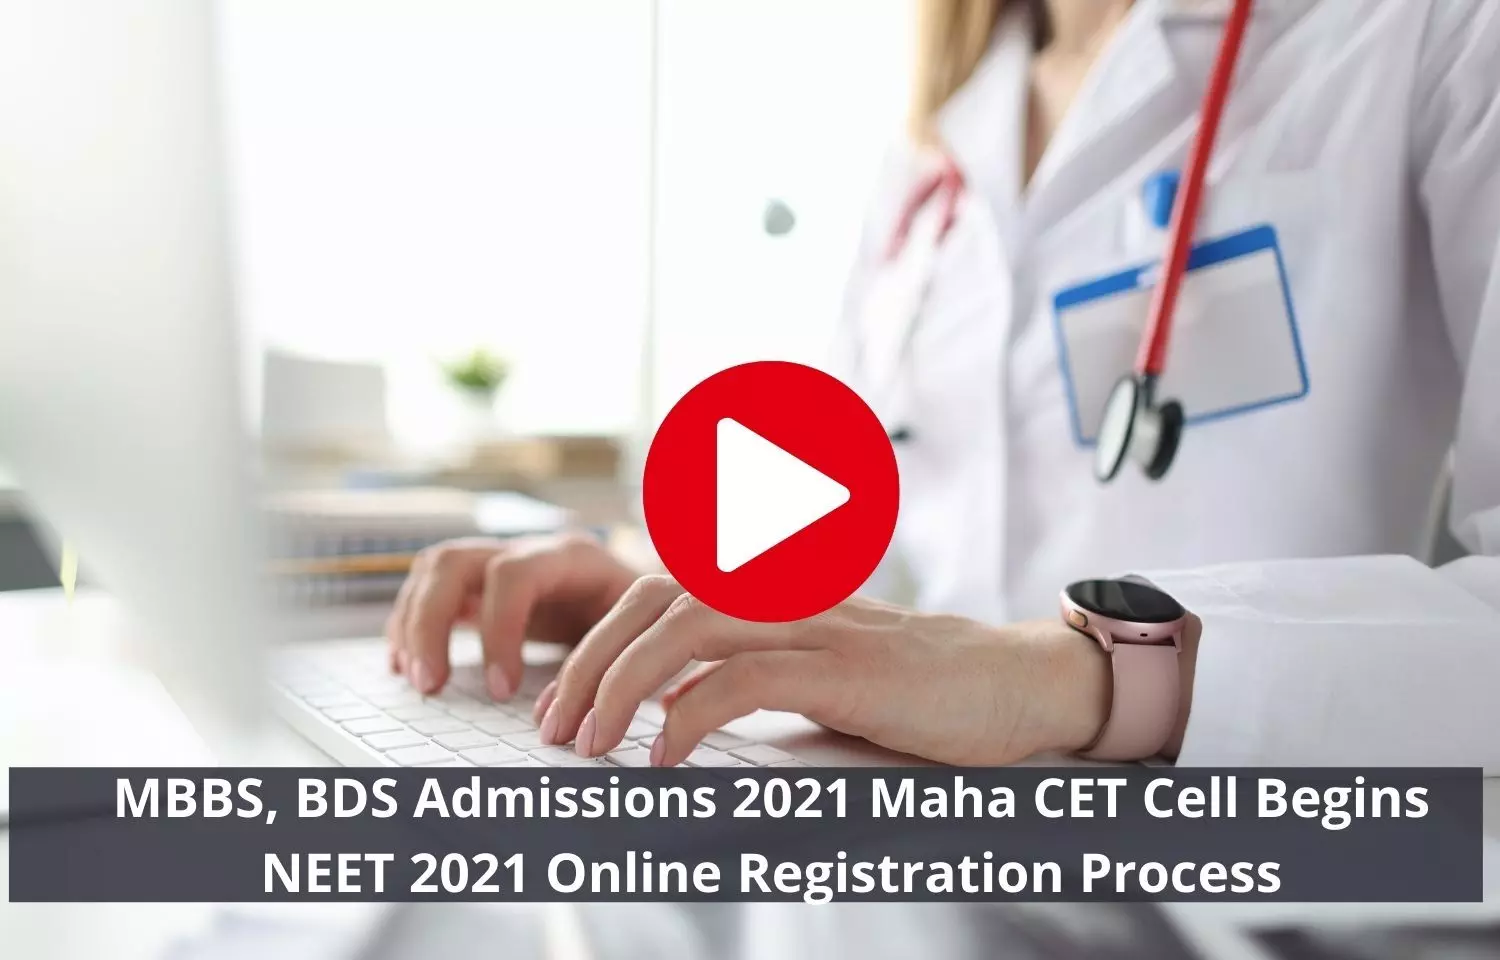 Maha CET Cell starts NEET 2021 online registration process